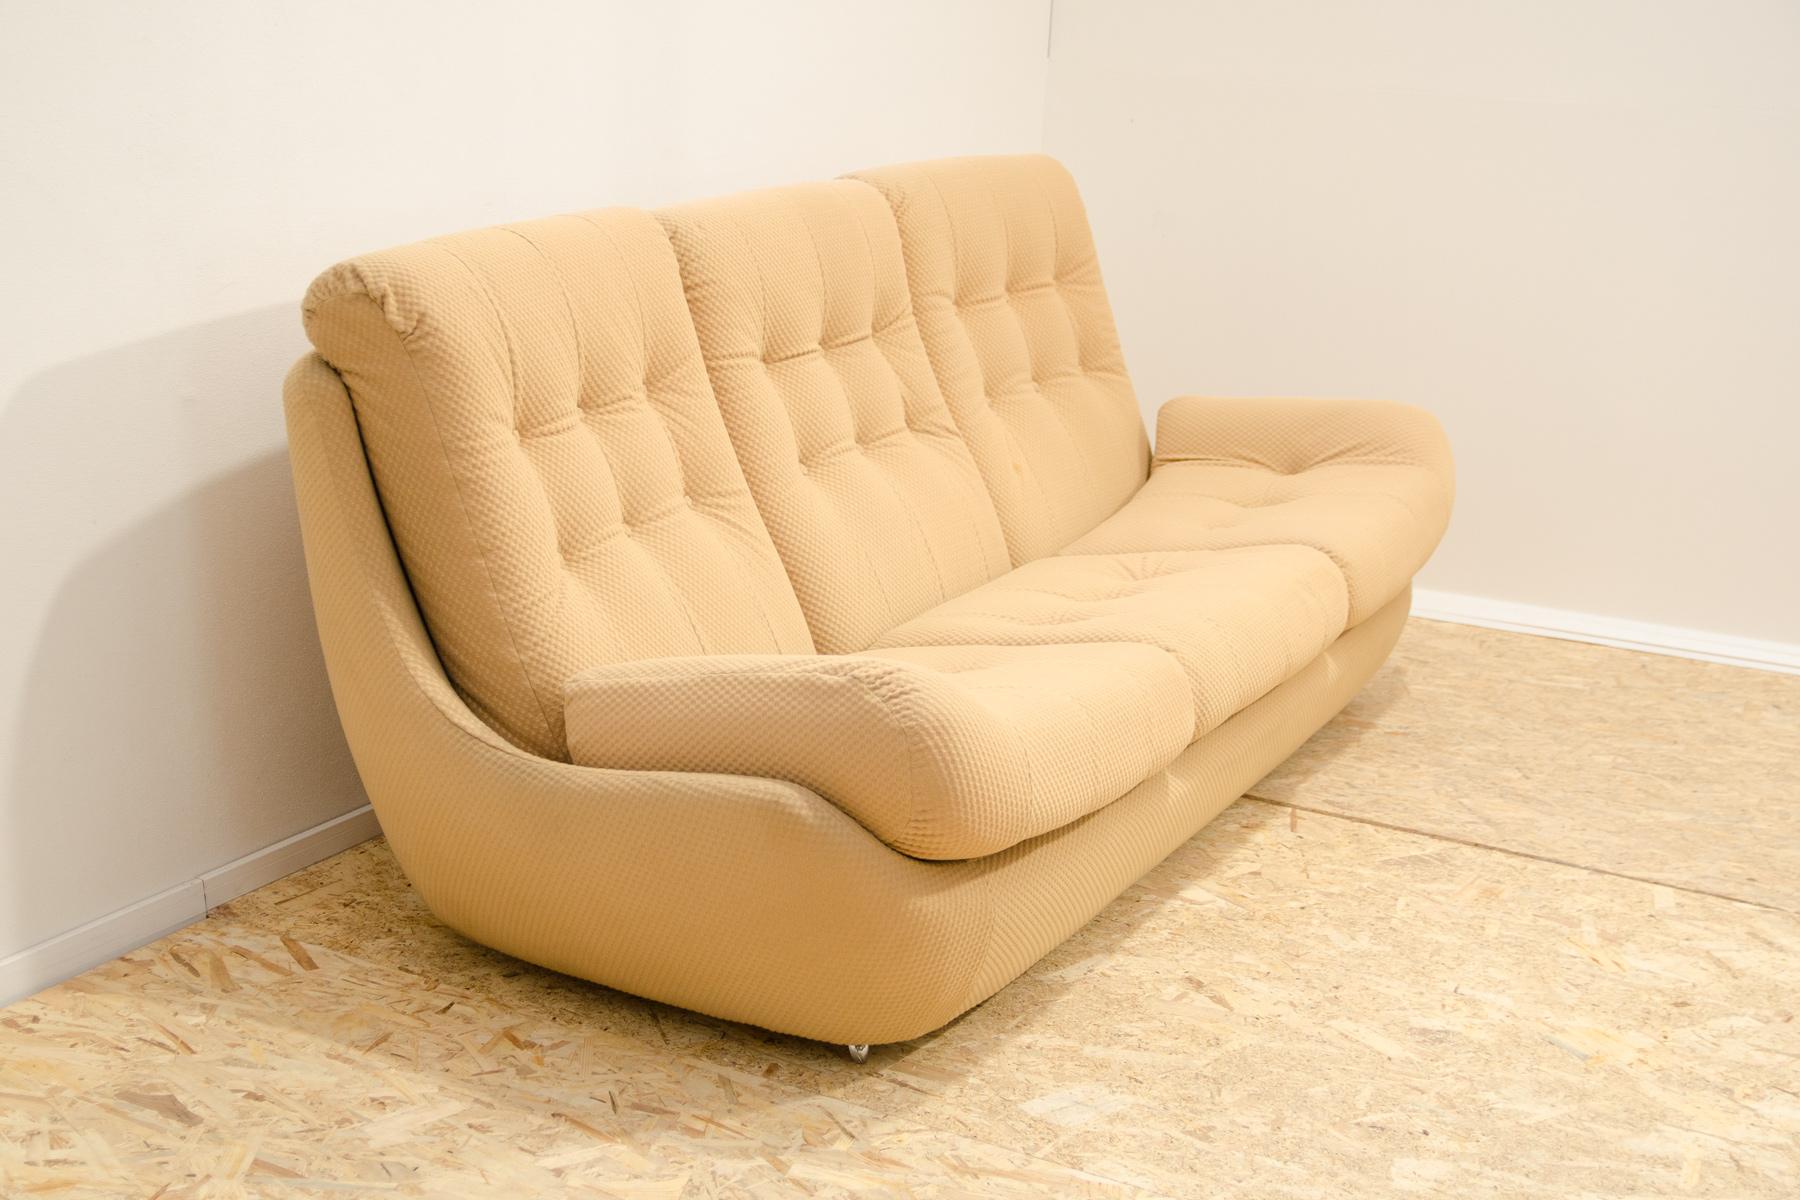 Molded Eastern bloc Vintage sofa by Jitona, Czechoslovakia, 1970´s For Sale